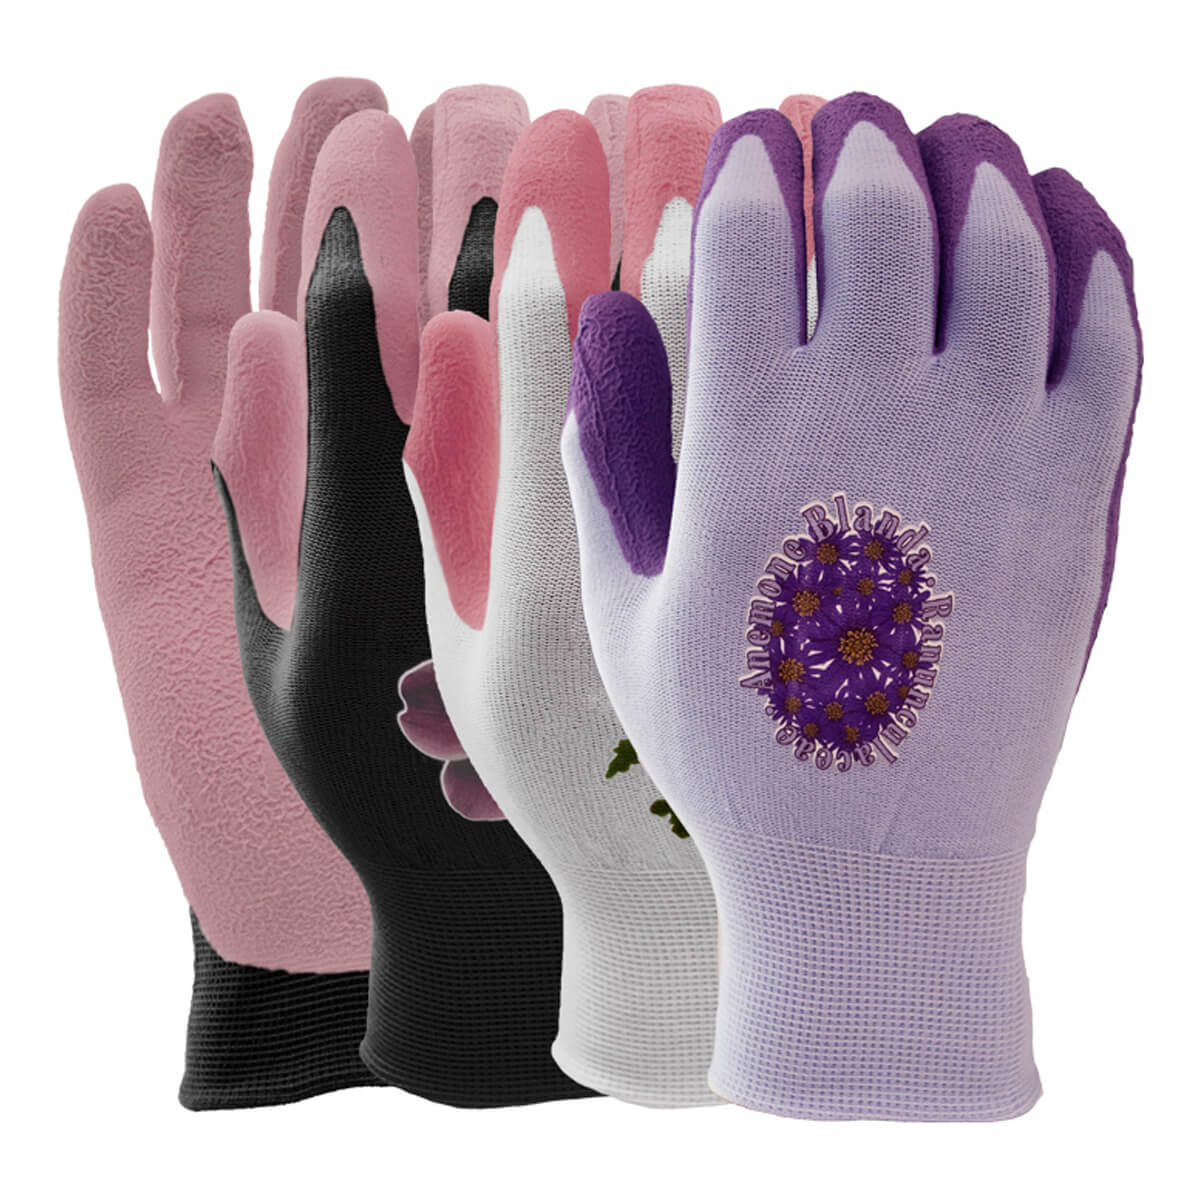 Botanical D-Lites Gloves - M